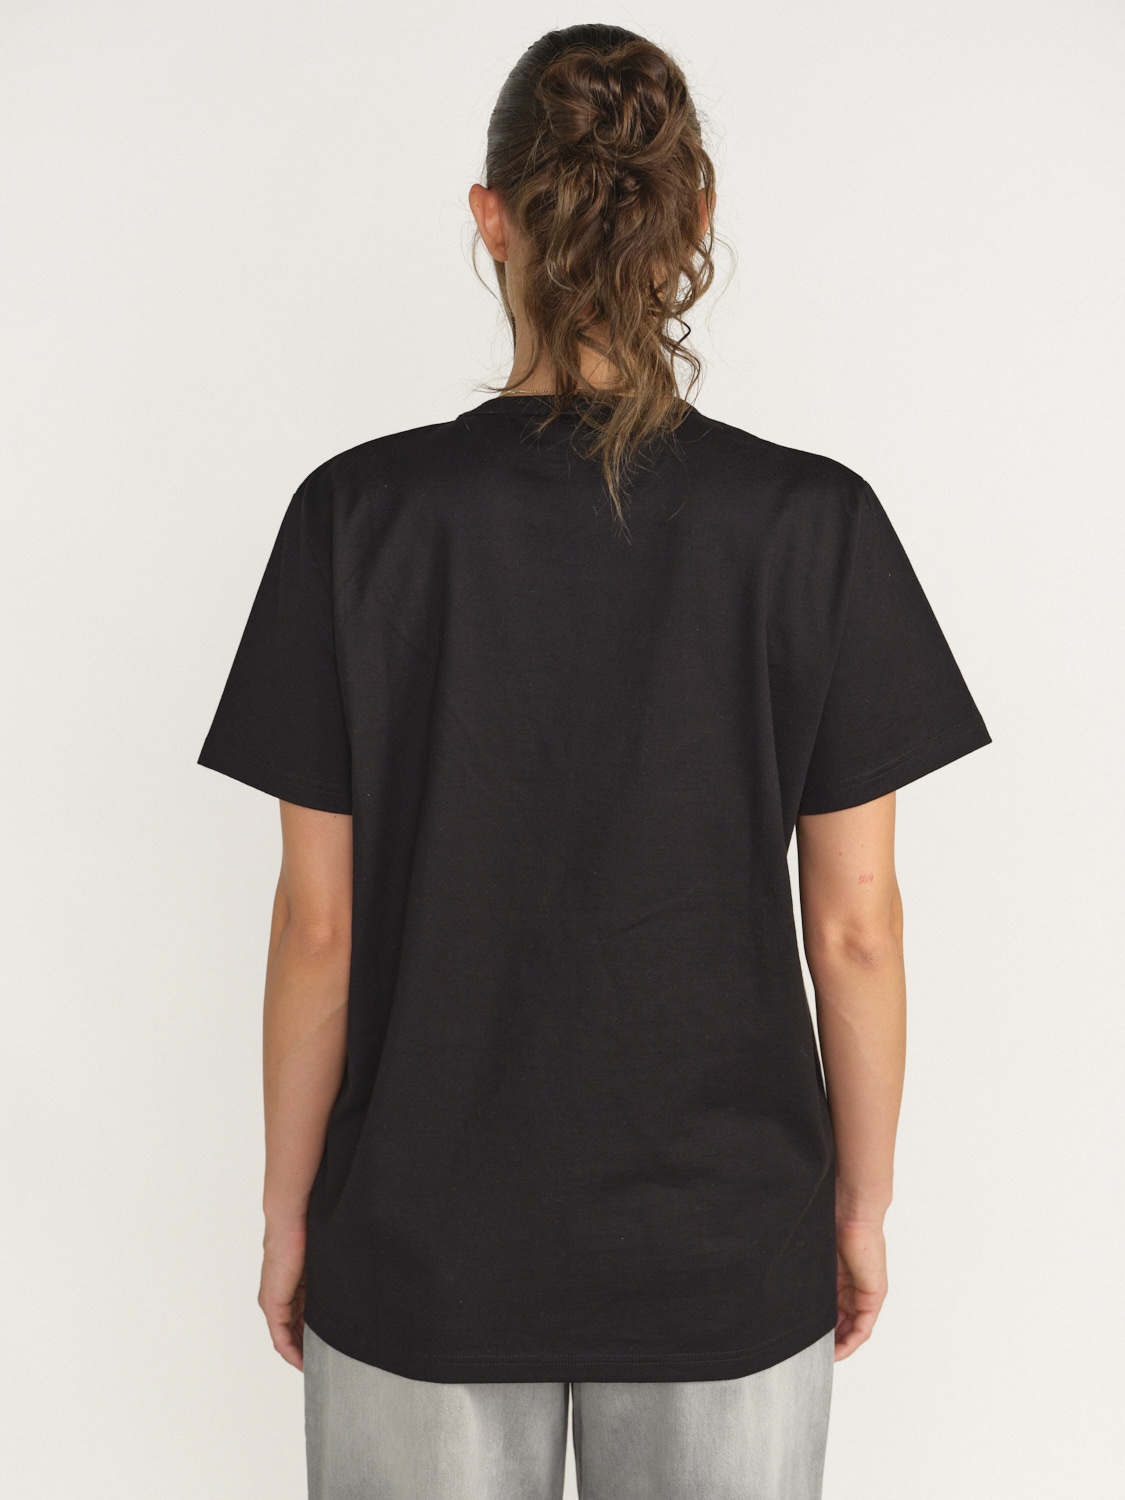 Barrie Barrie - Cardo - Camiseta con parche del logotipo marrón XS